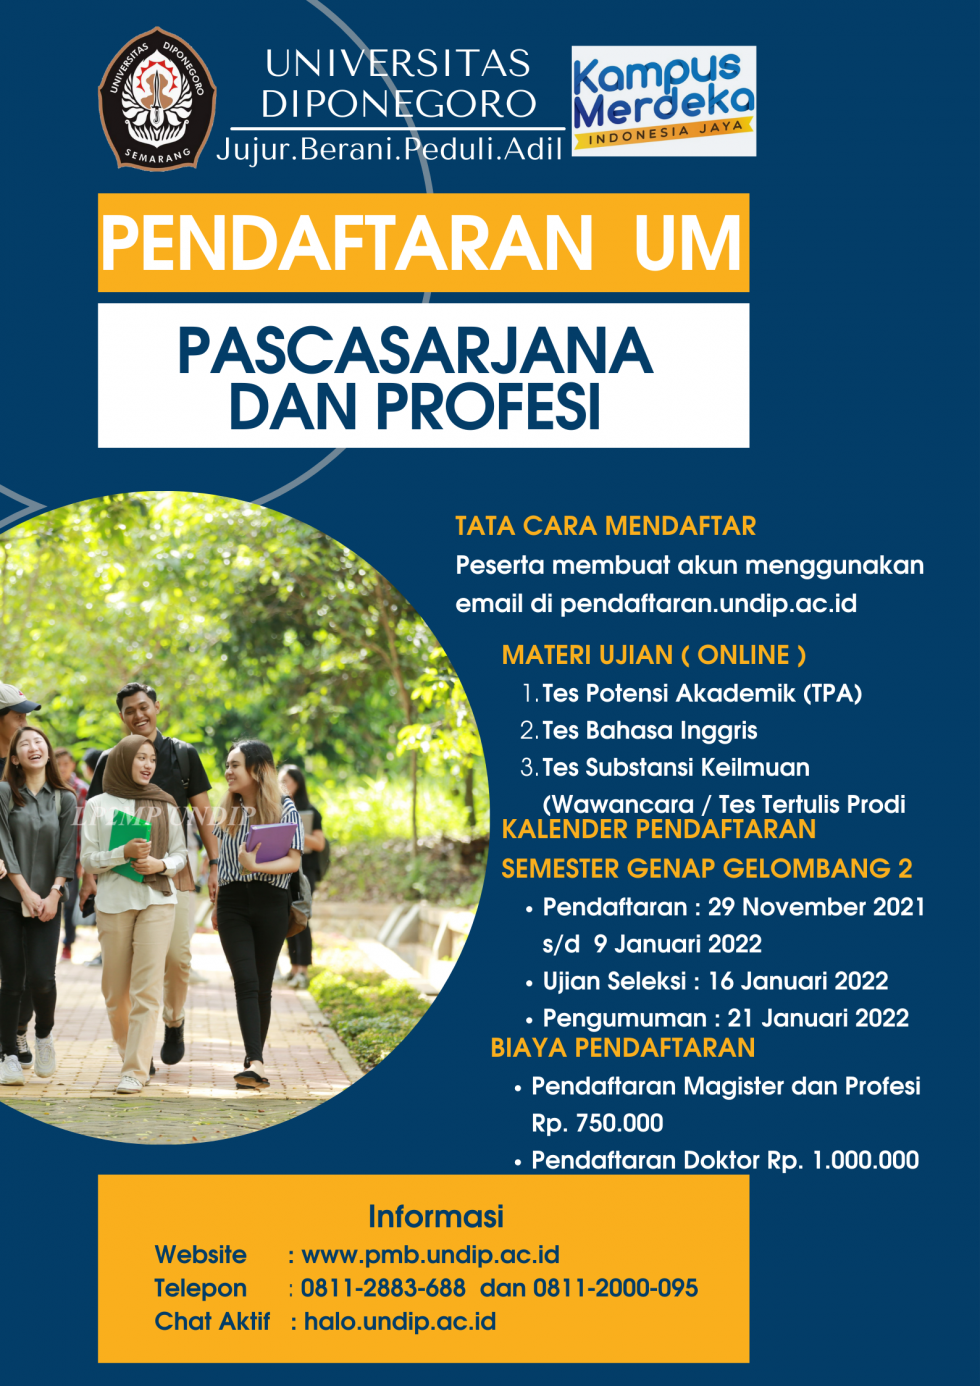 UM Registration For Postgraduate and Profession Programs Of Even Semester Batch 2